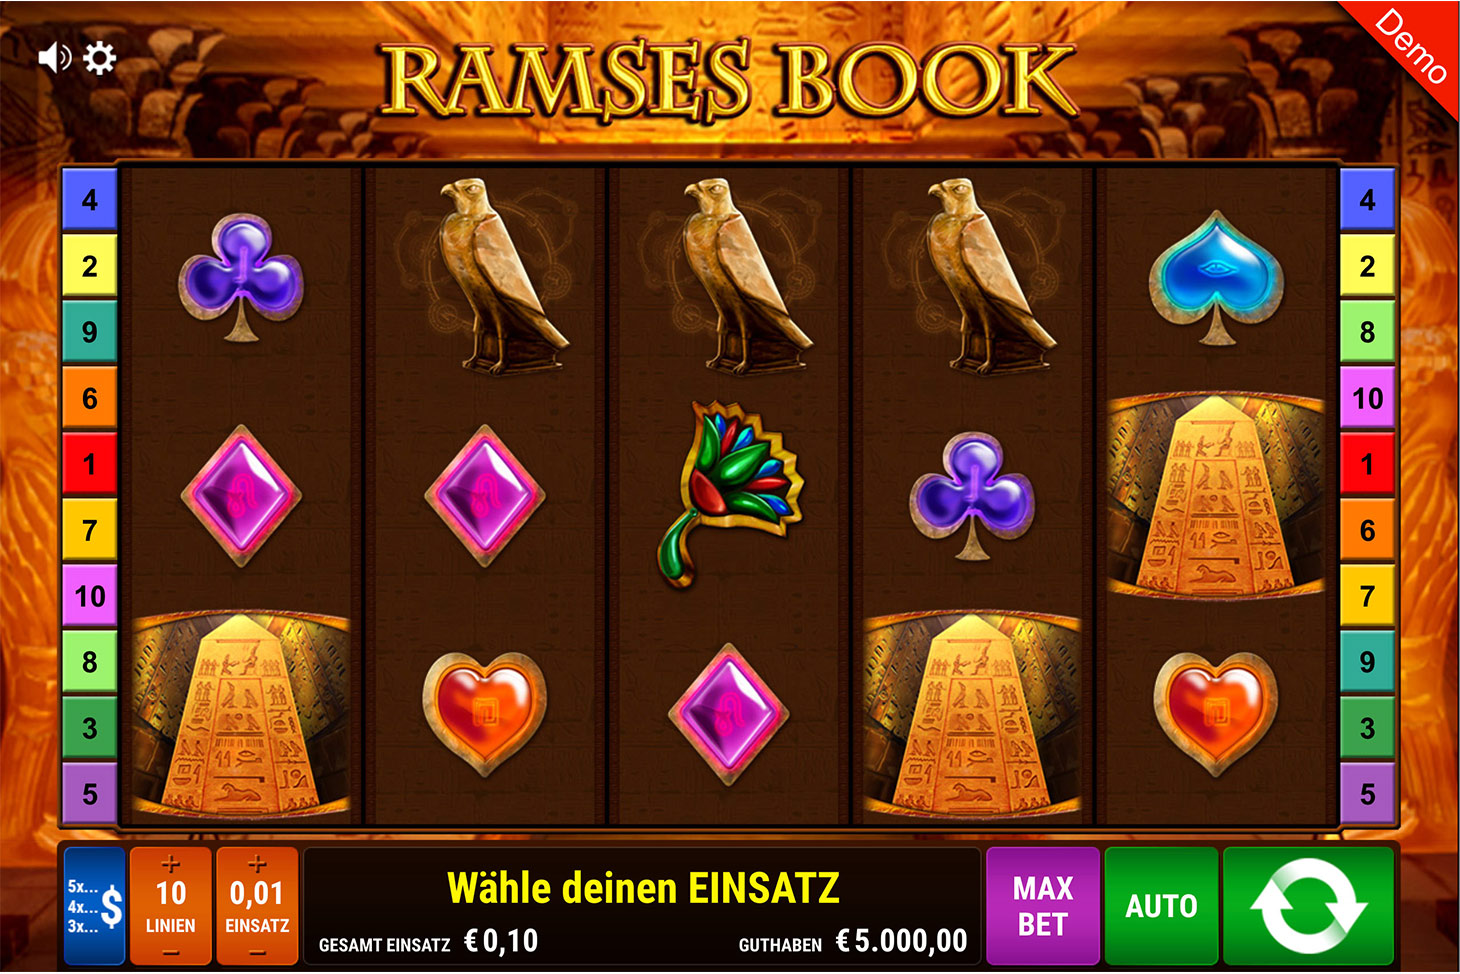 Ramses book Spielautomaten